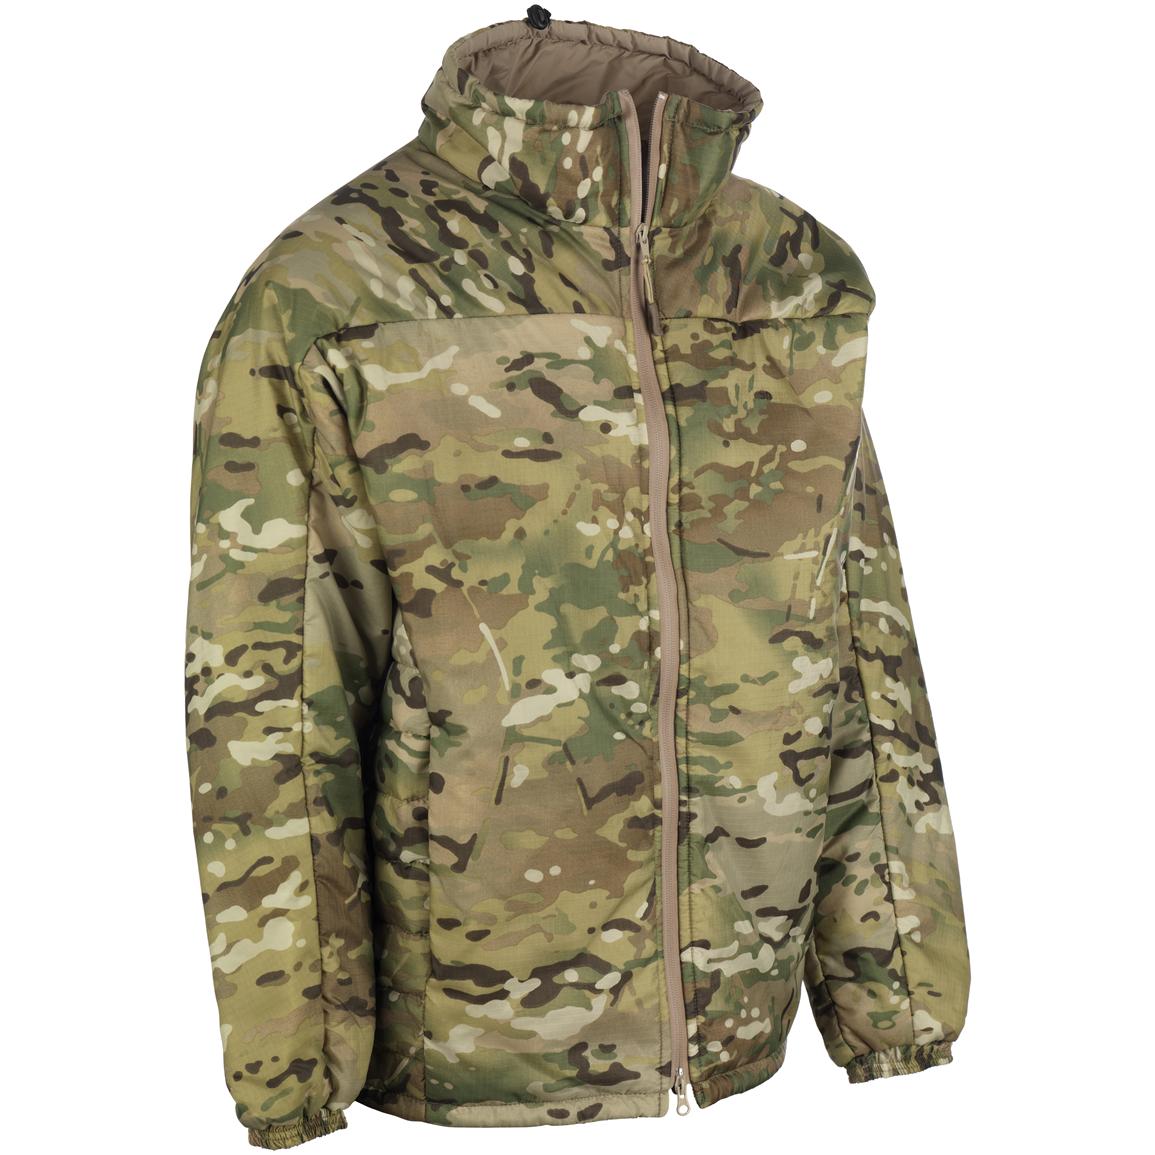 Snugpak® SJ-3 Jacket - 302532, Tactical Clothing at Sportsman's Guide